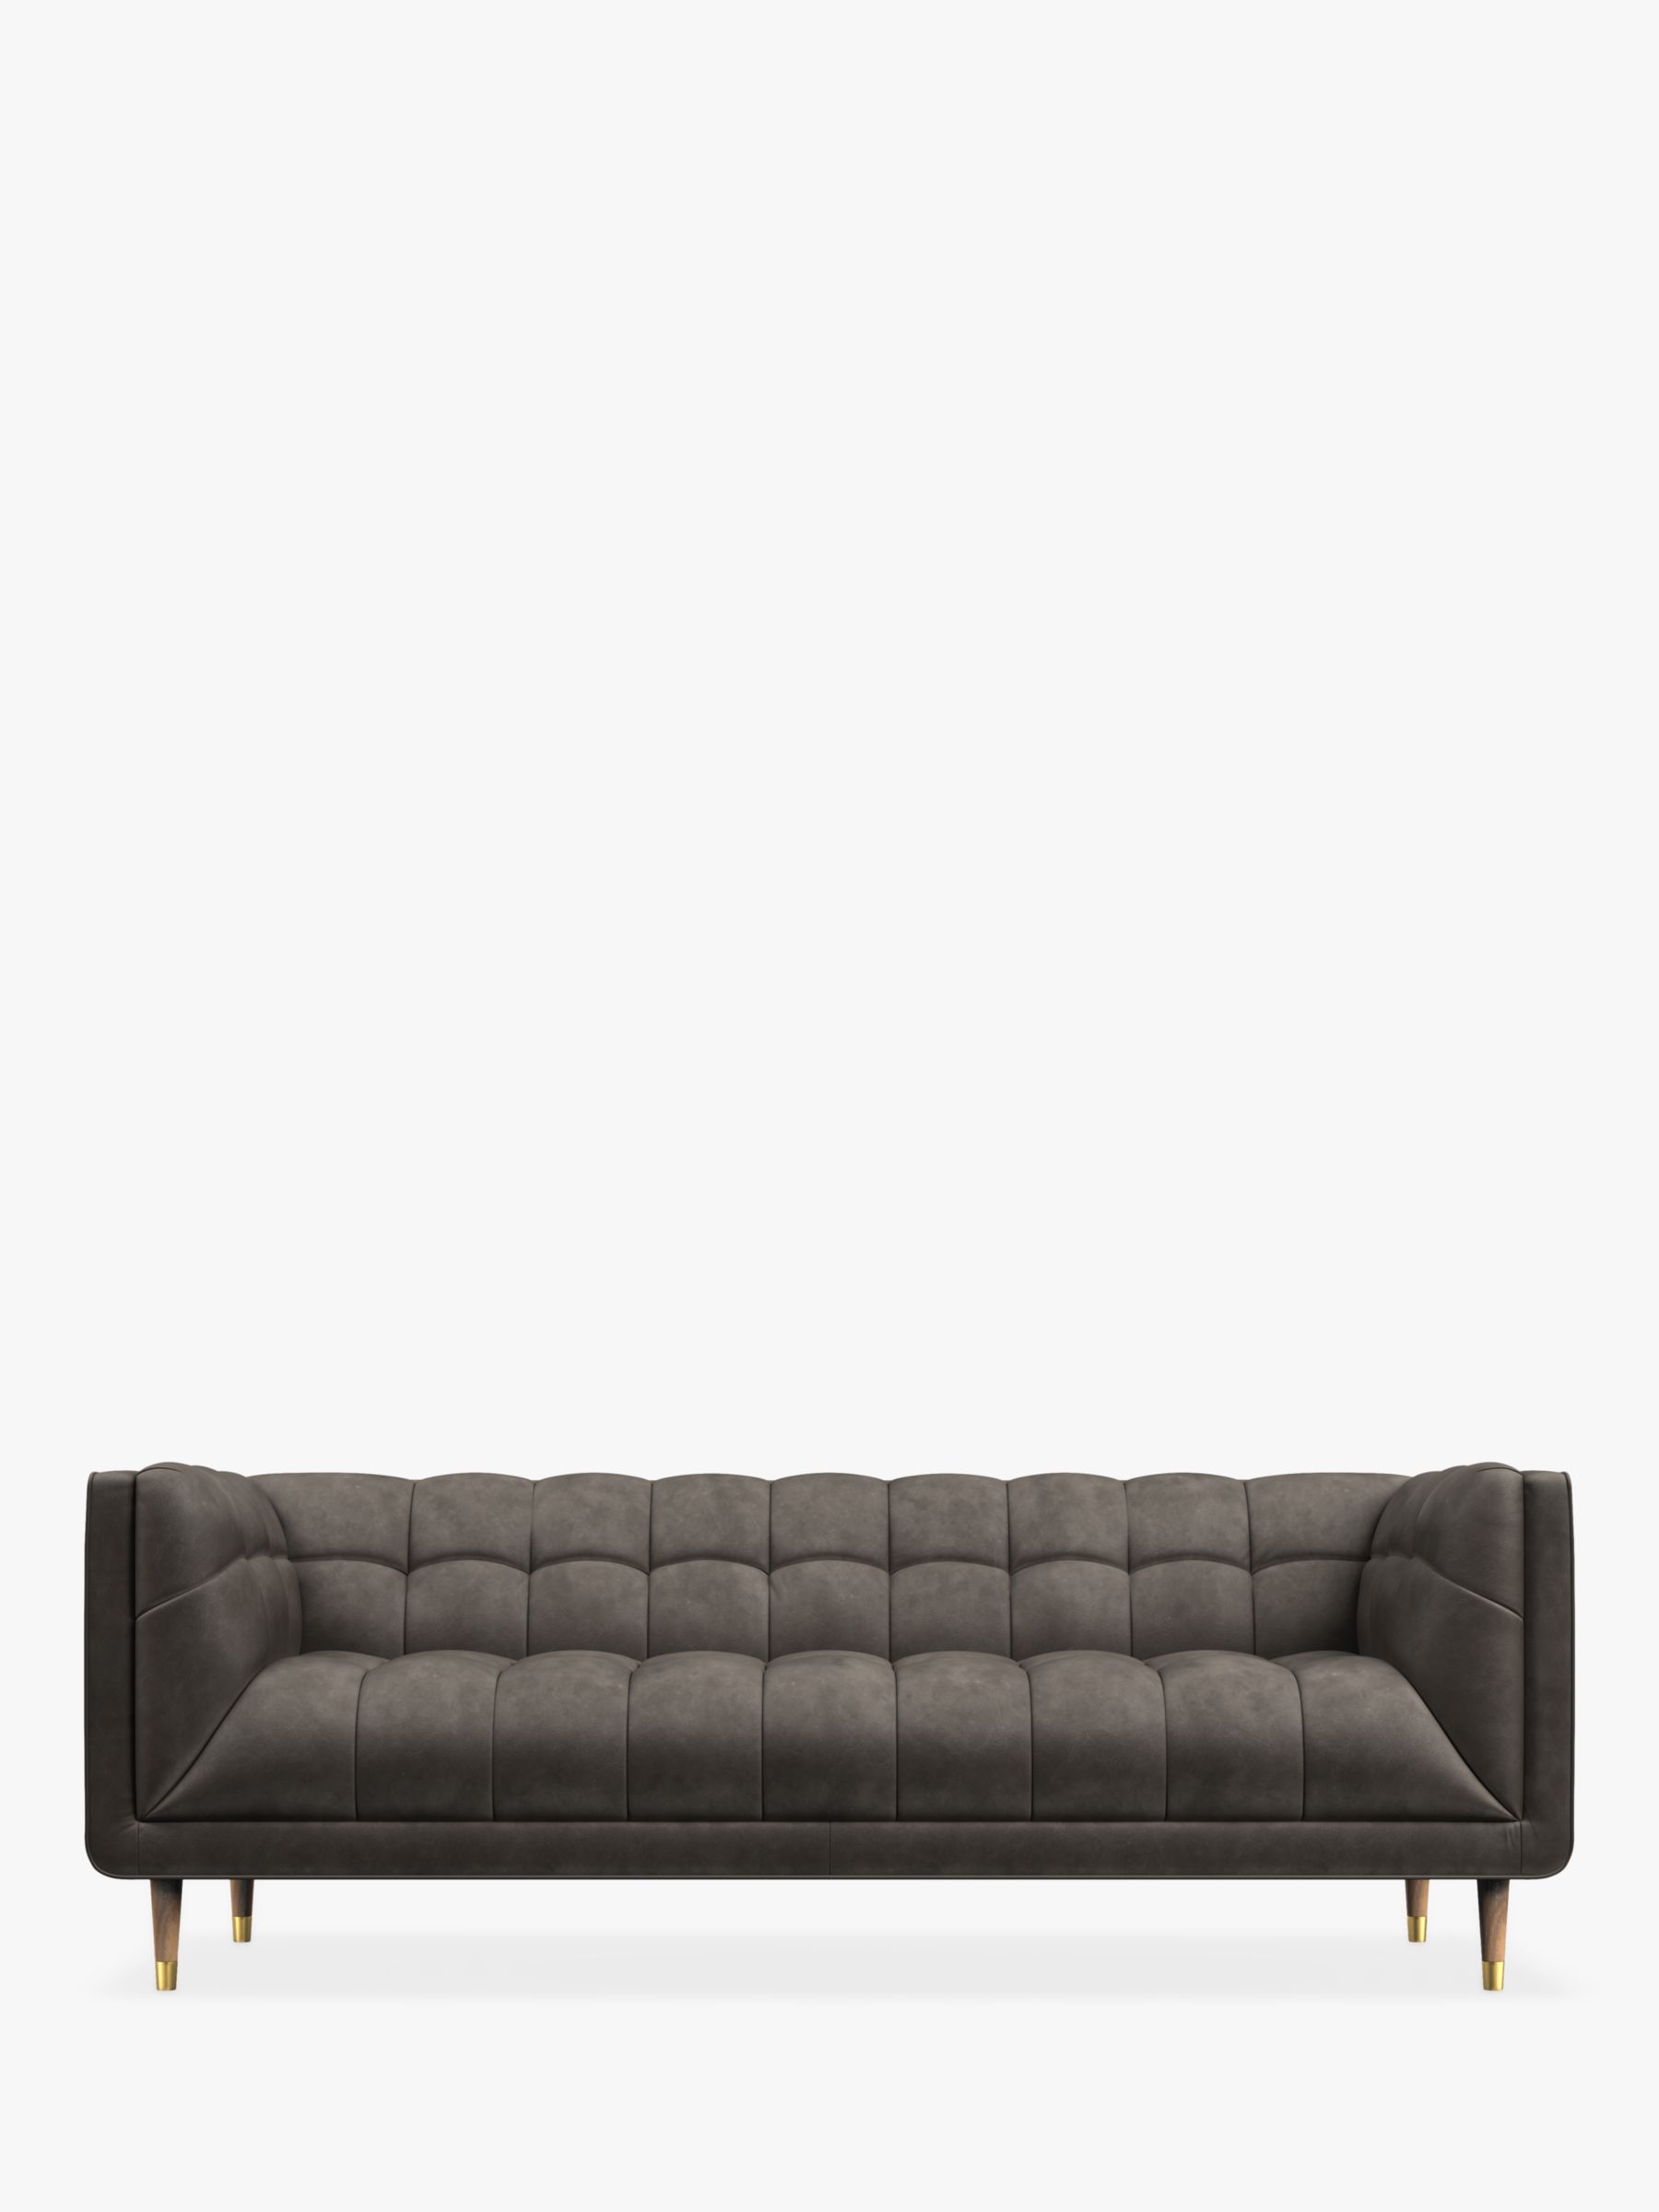 Grace Range, At The Helm Grace Grand 4 Seater Sofa, Dark Leg, Limestone Leather